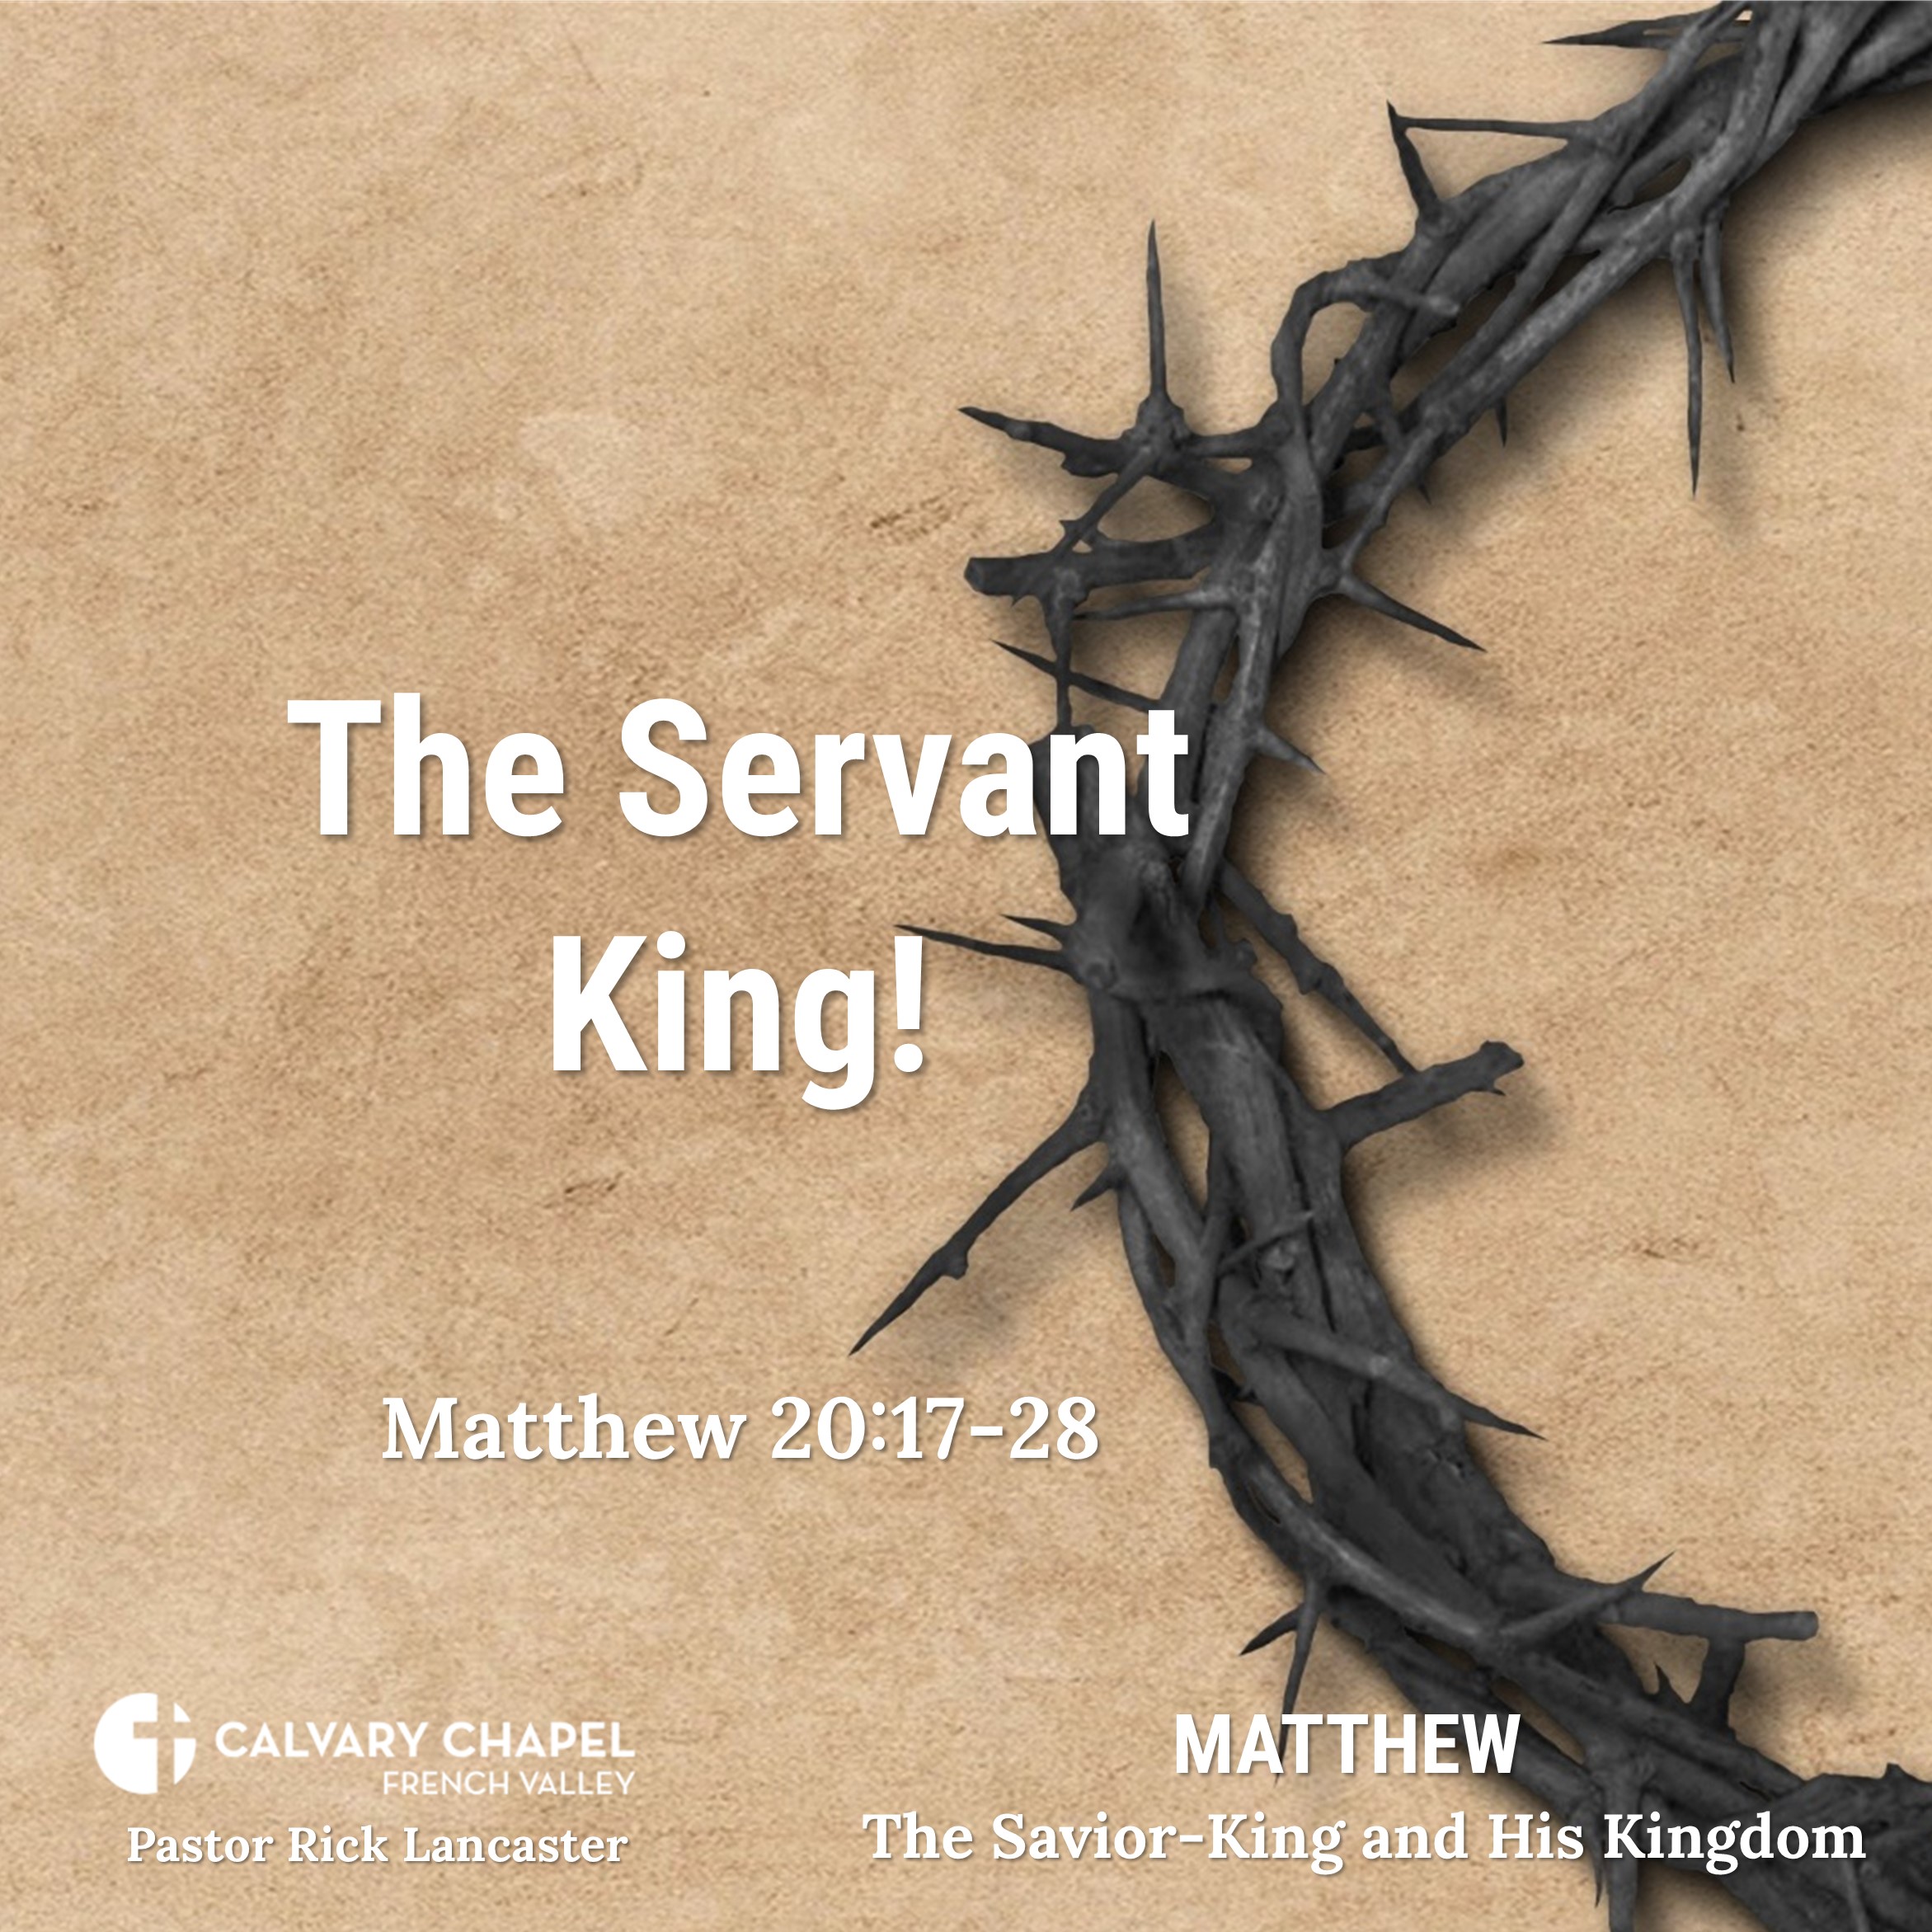 The Servant King! – Matthew 20:17-28 - Matthew: The Savior-King and His Kingdom